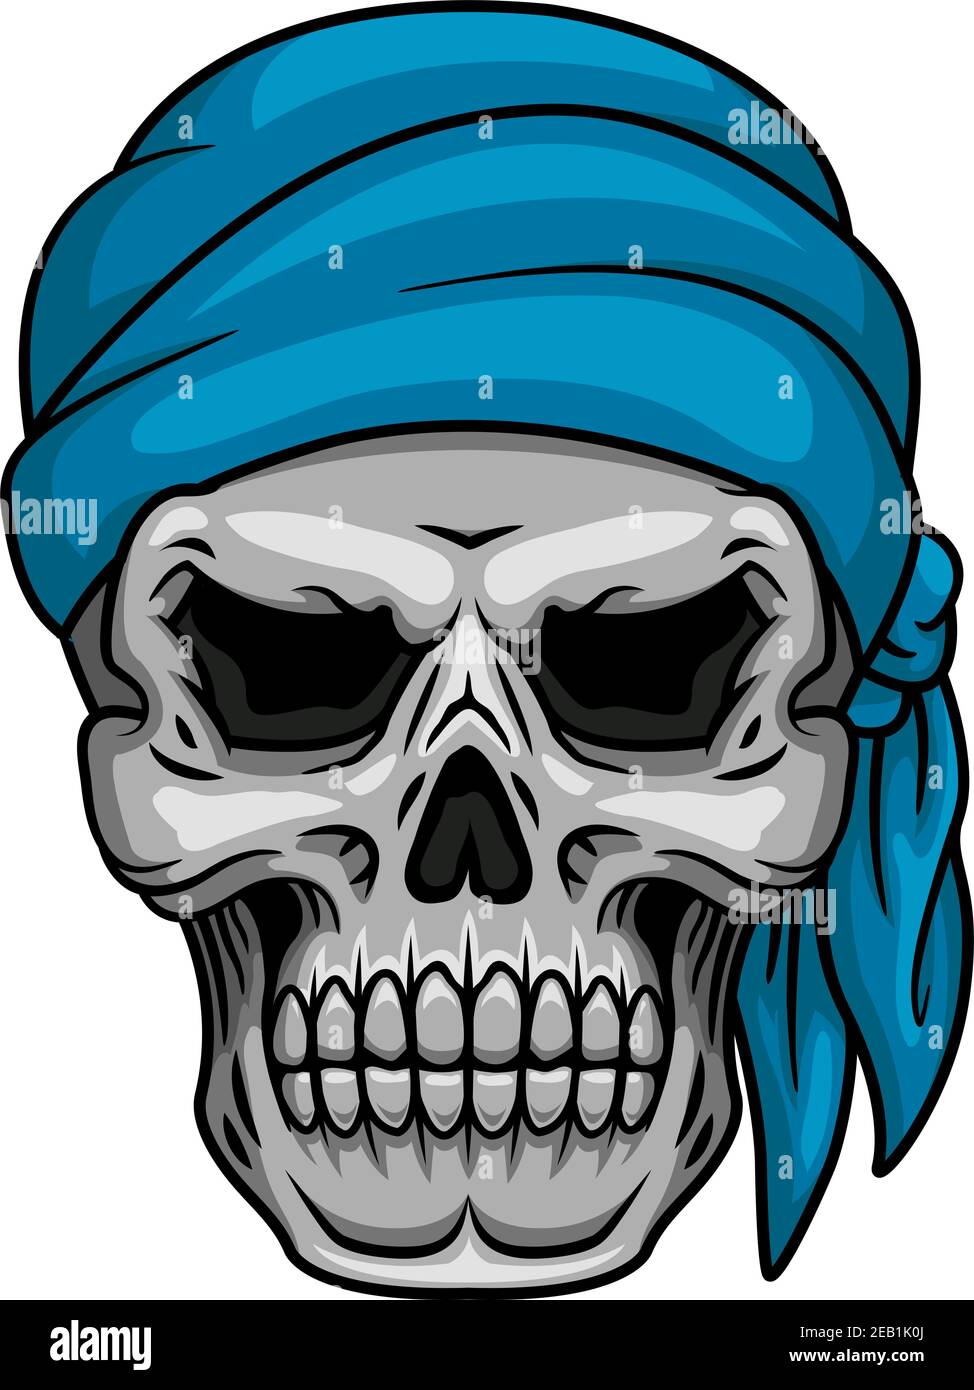 Skull of pirate in bandana icon for tattoo design  Stock Illustration  34261976  PIXTA